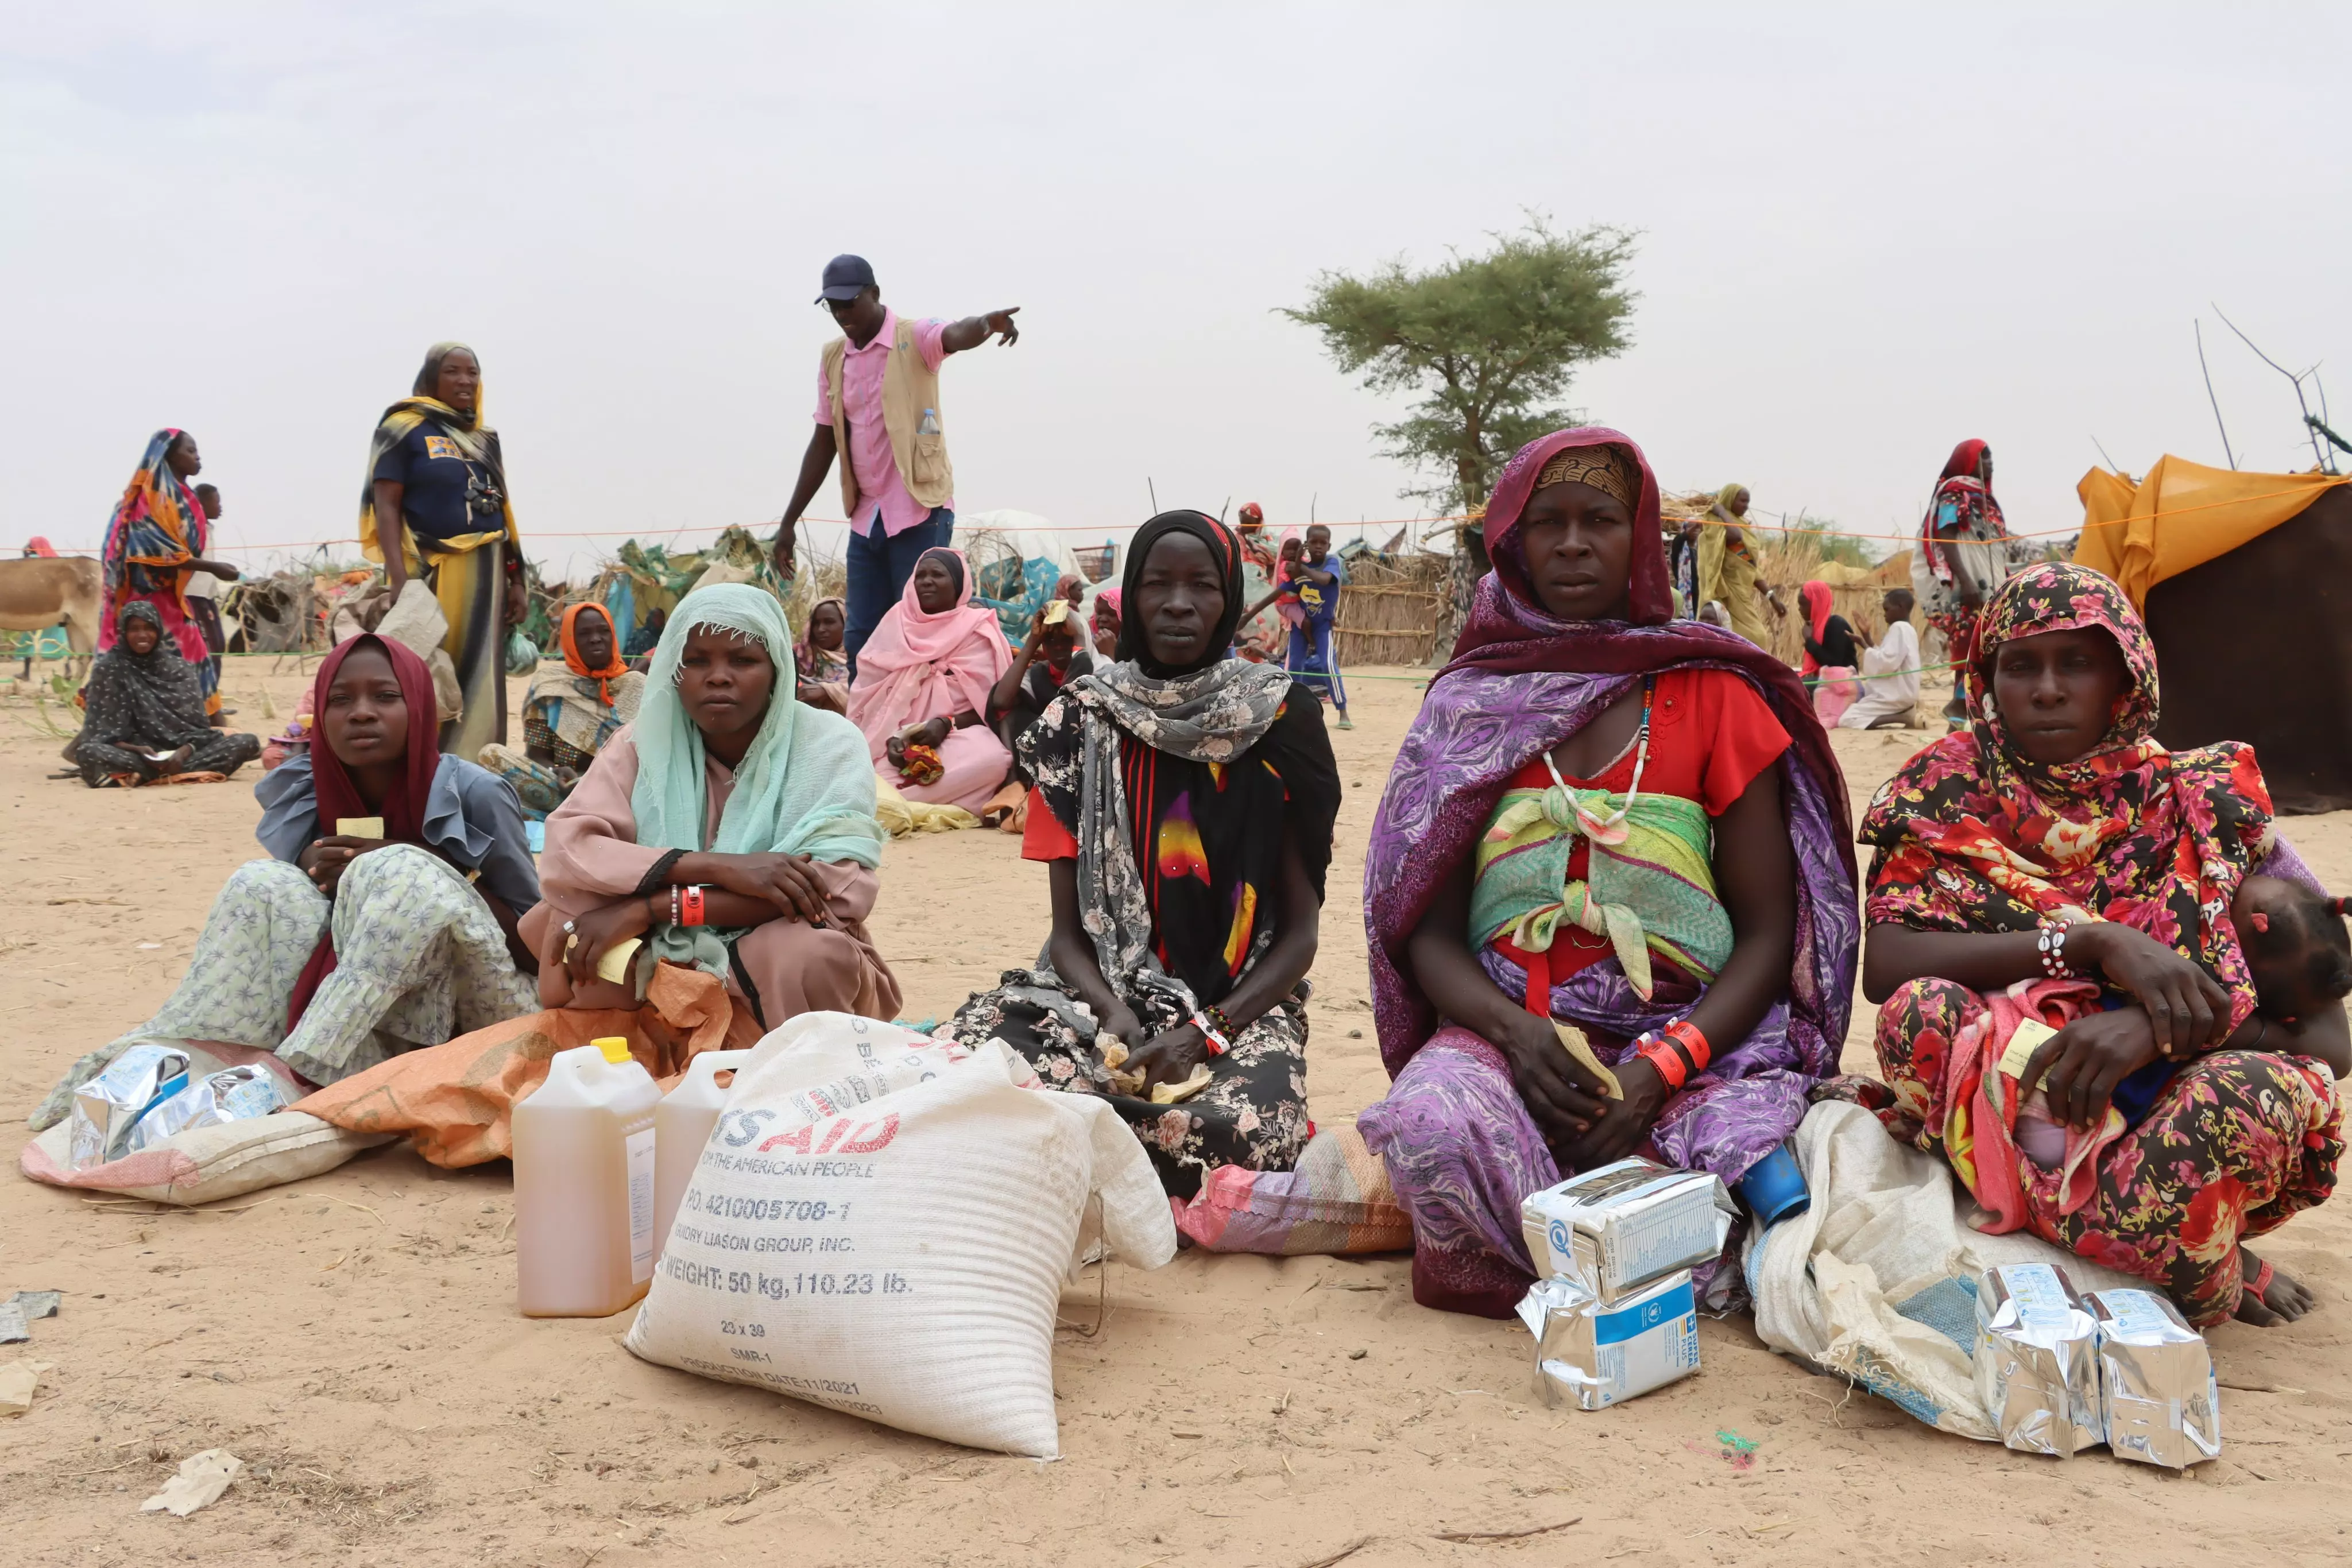 Six months of war in Sudan has left 9,000 dead: UN aid chief